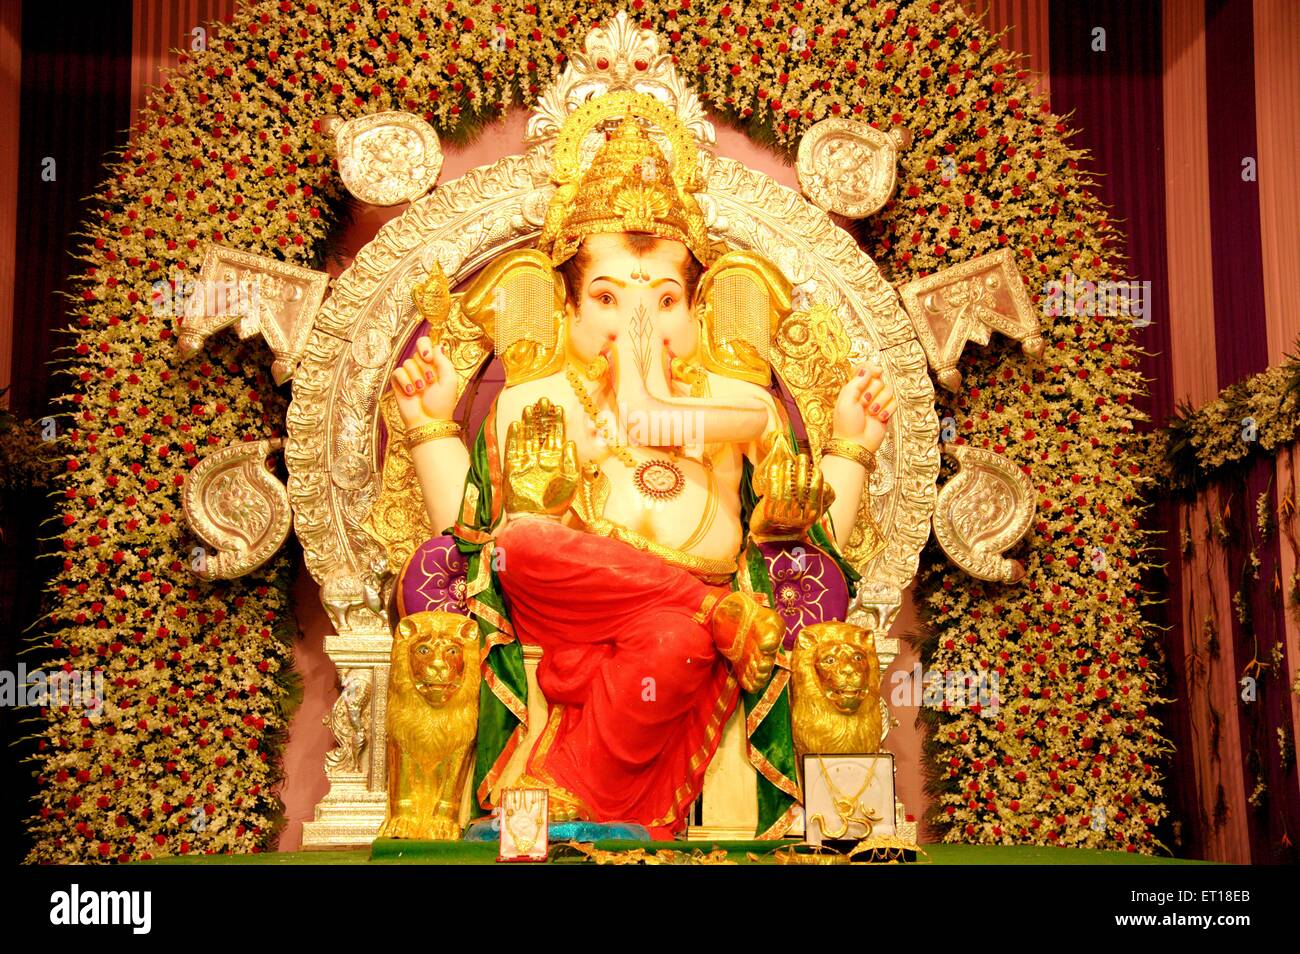 Lord Ganesh verziert mit Gold Ornament Gaur Schweinsberg Brahmane Mumbai Maharashtra Indien Asien Stockfoto